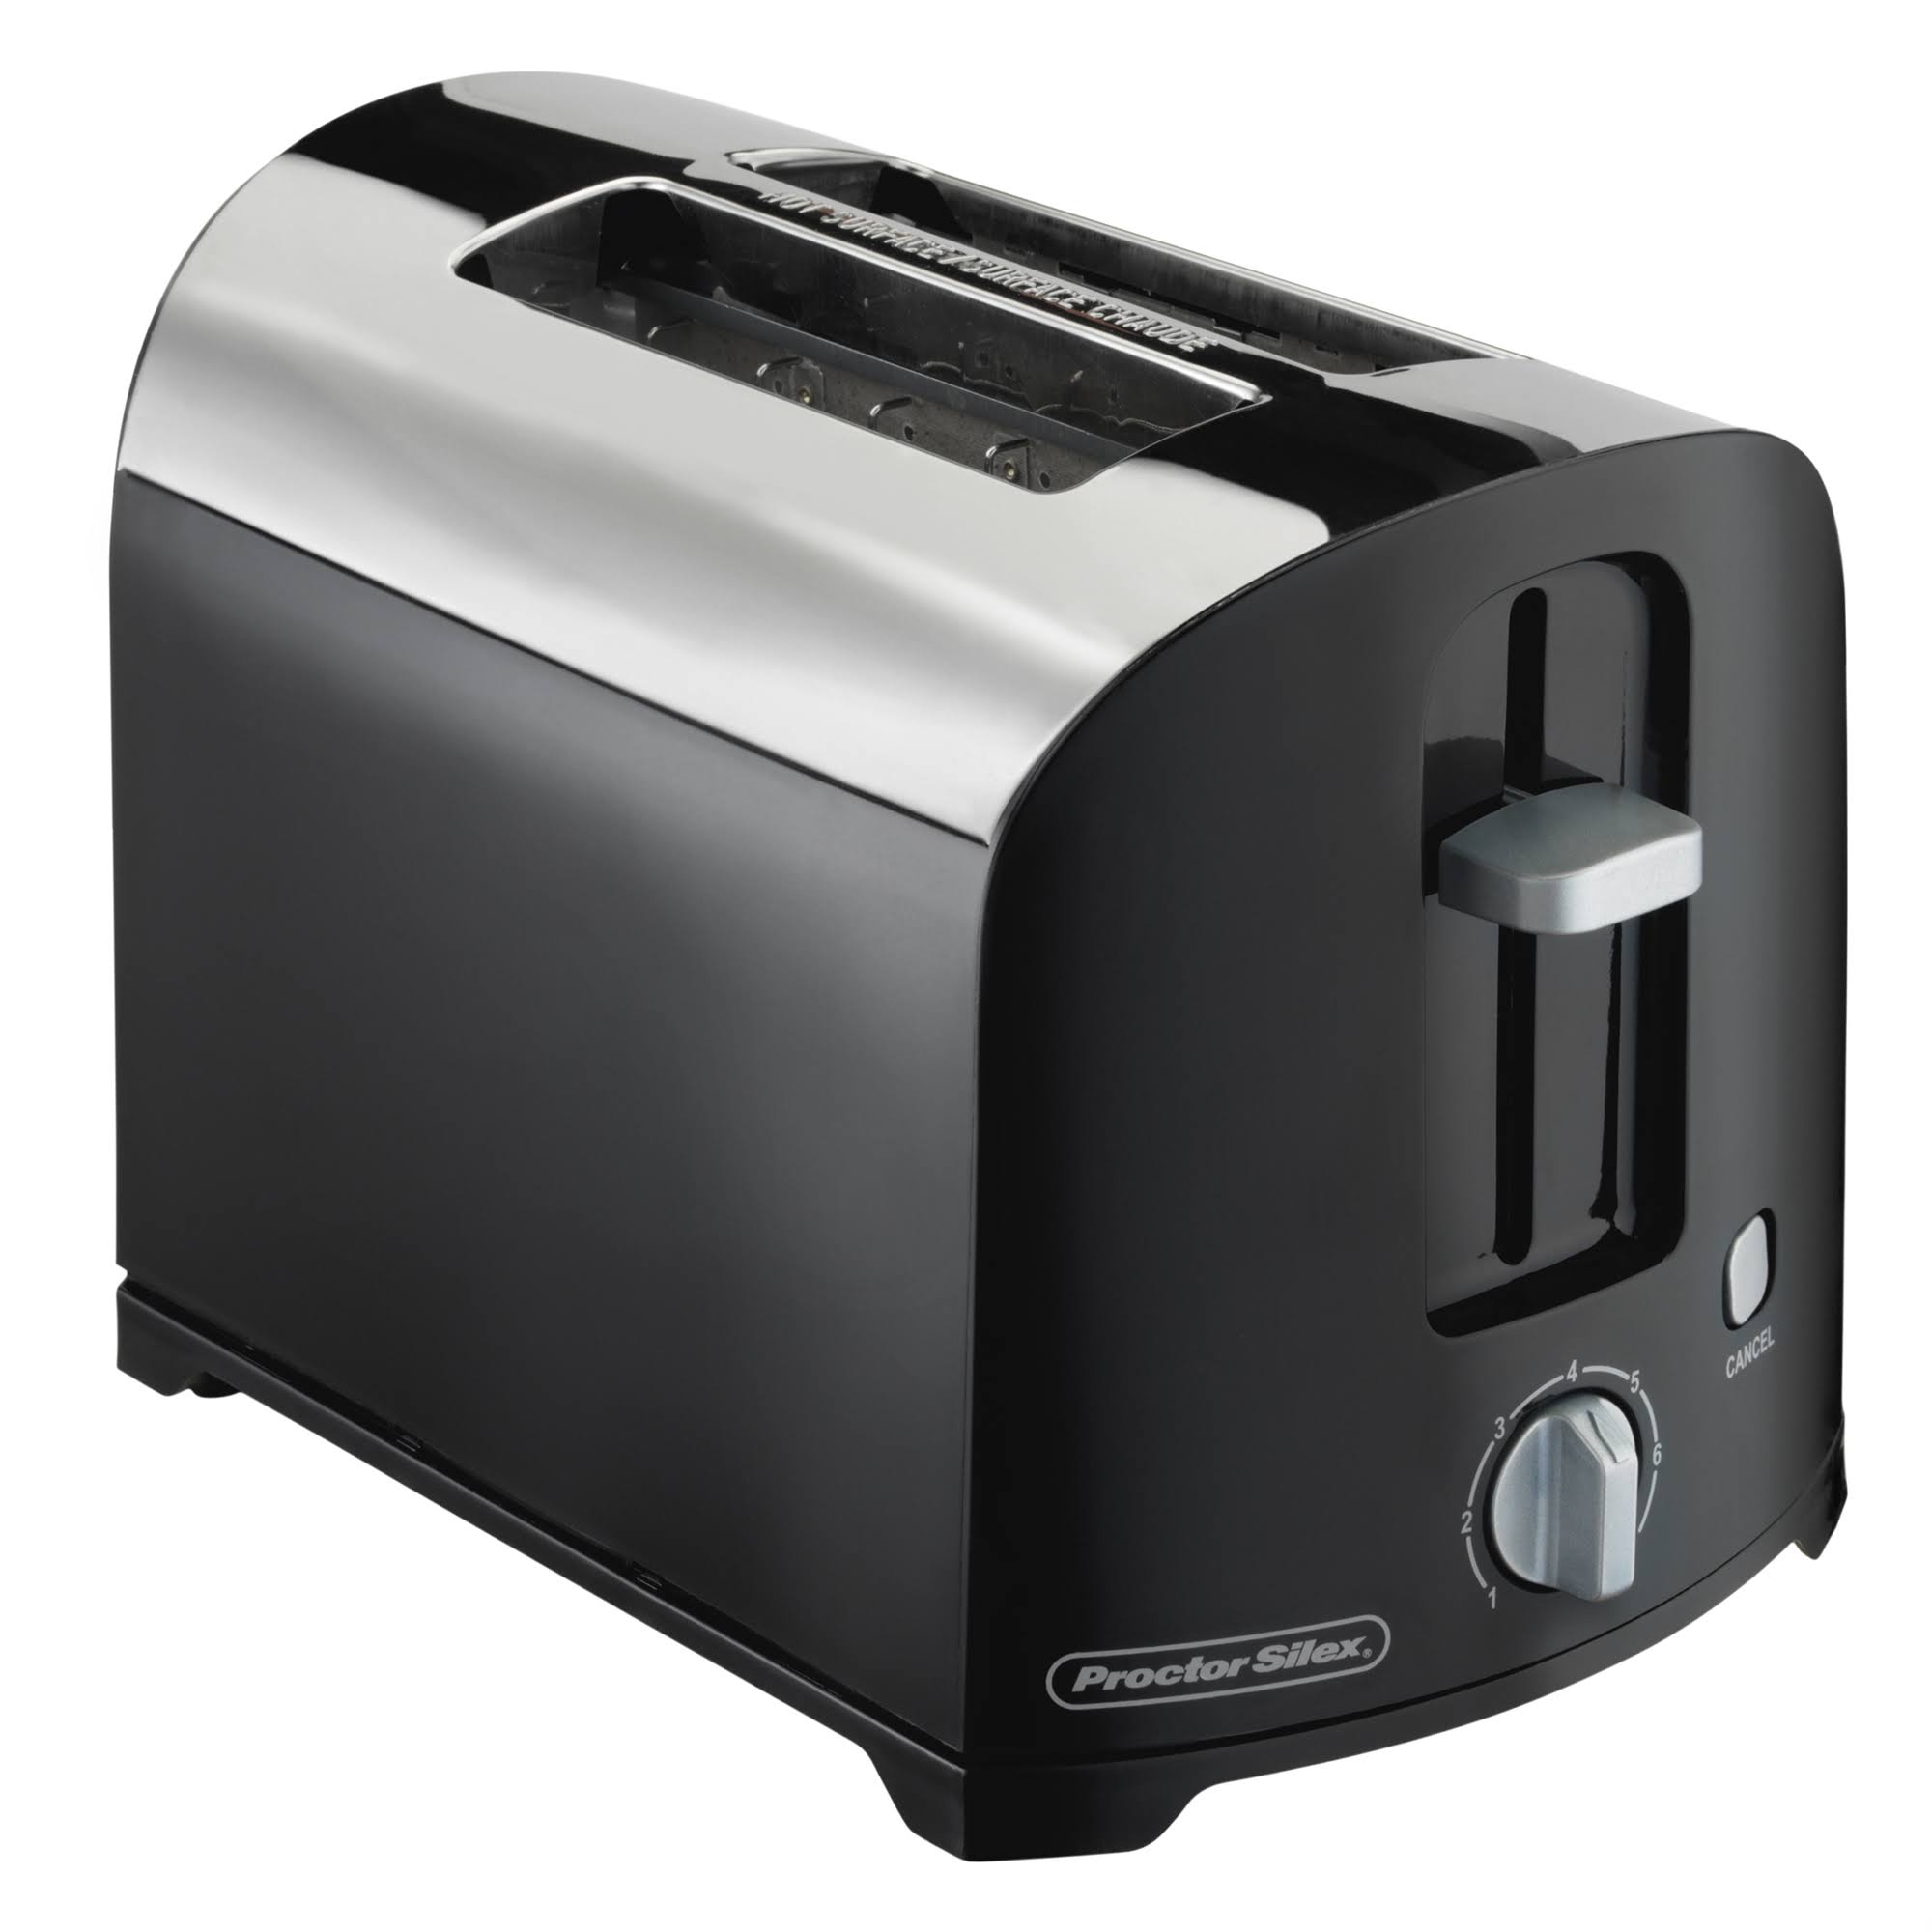 Proctor Silex Toaster - Black Chrome